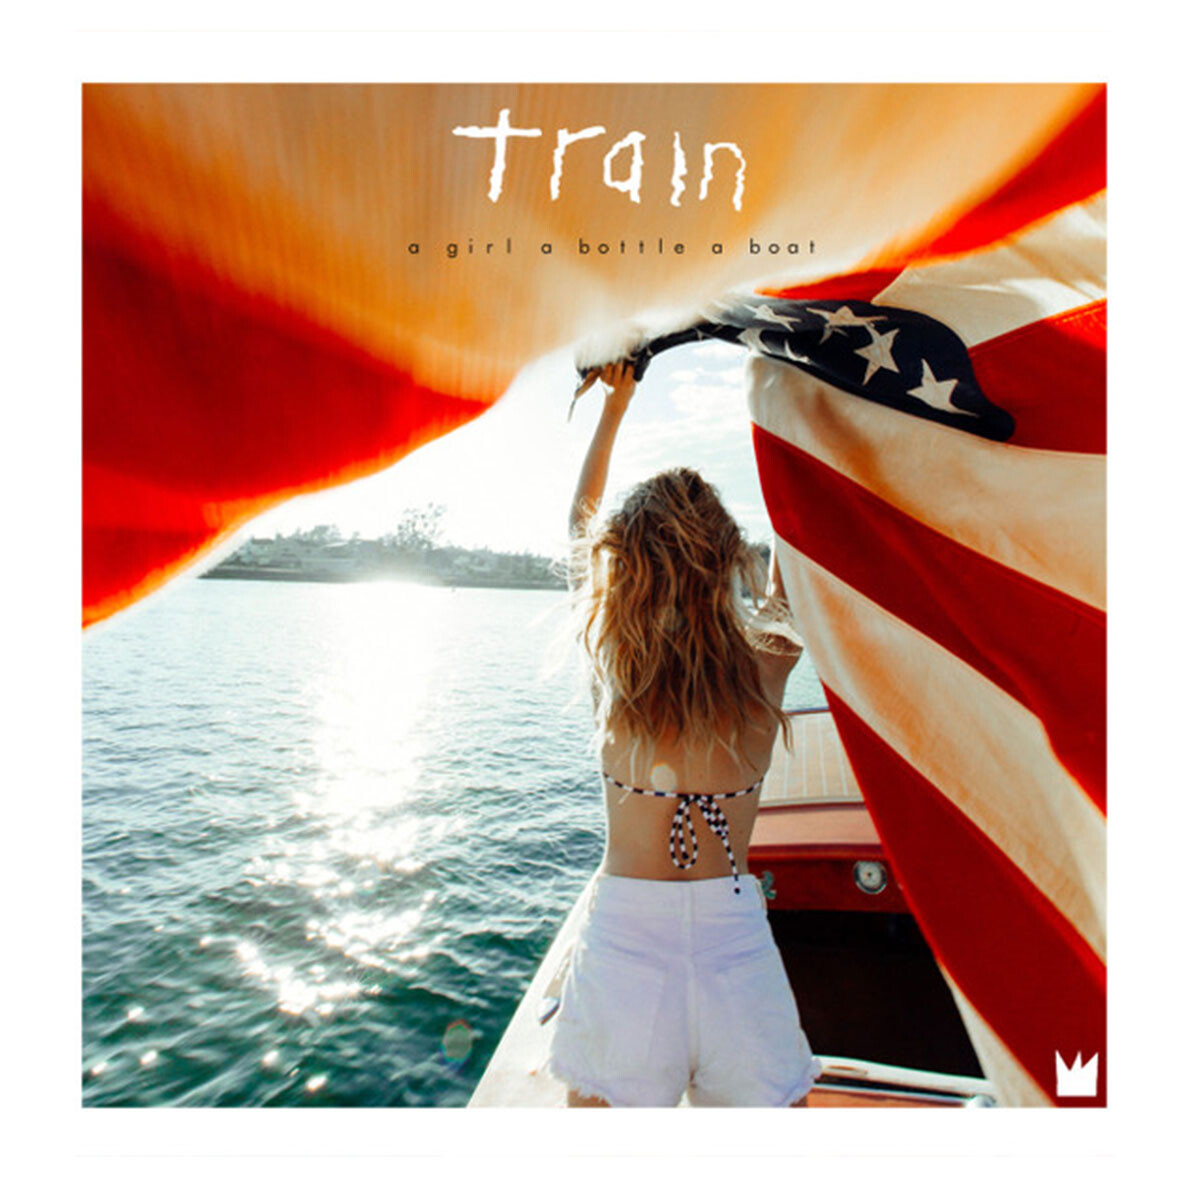 Train-a Girl A Bottle A Boat (arg) - Cd 